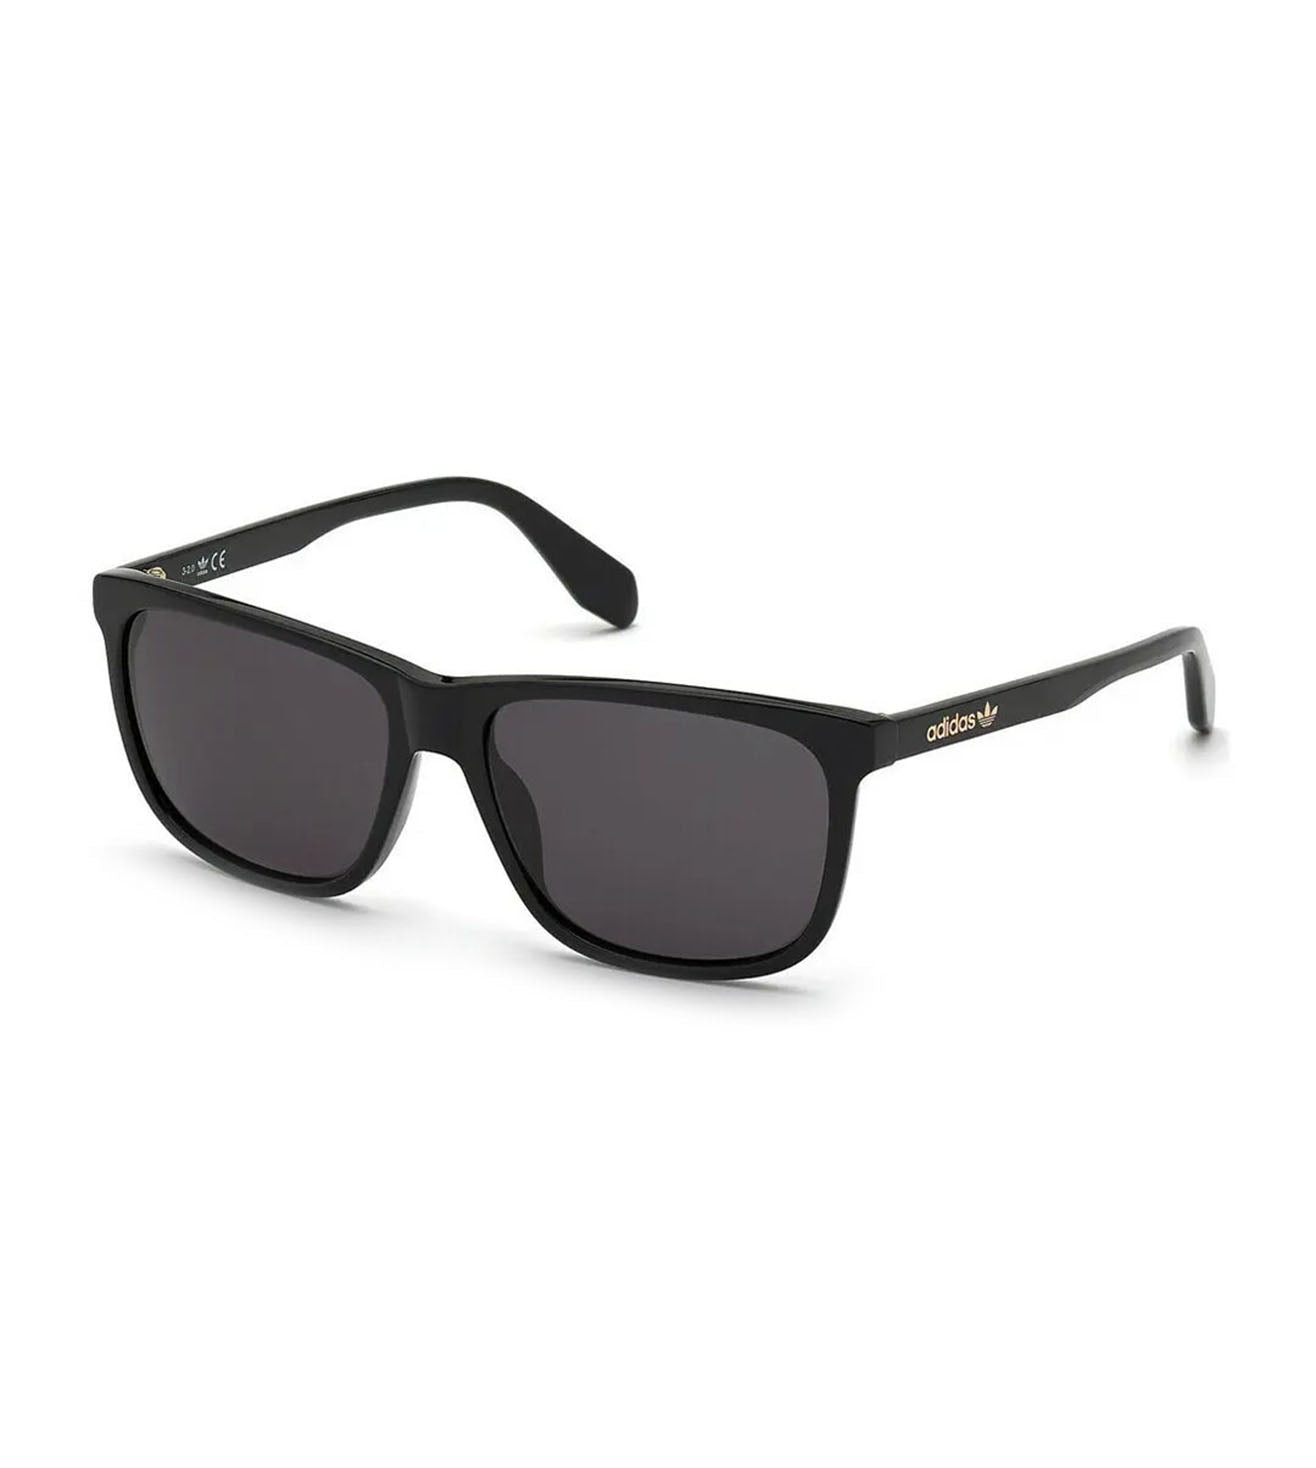 Adidas Originals Men's Grey Wayfarer Sunglasses